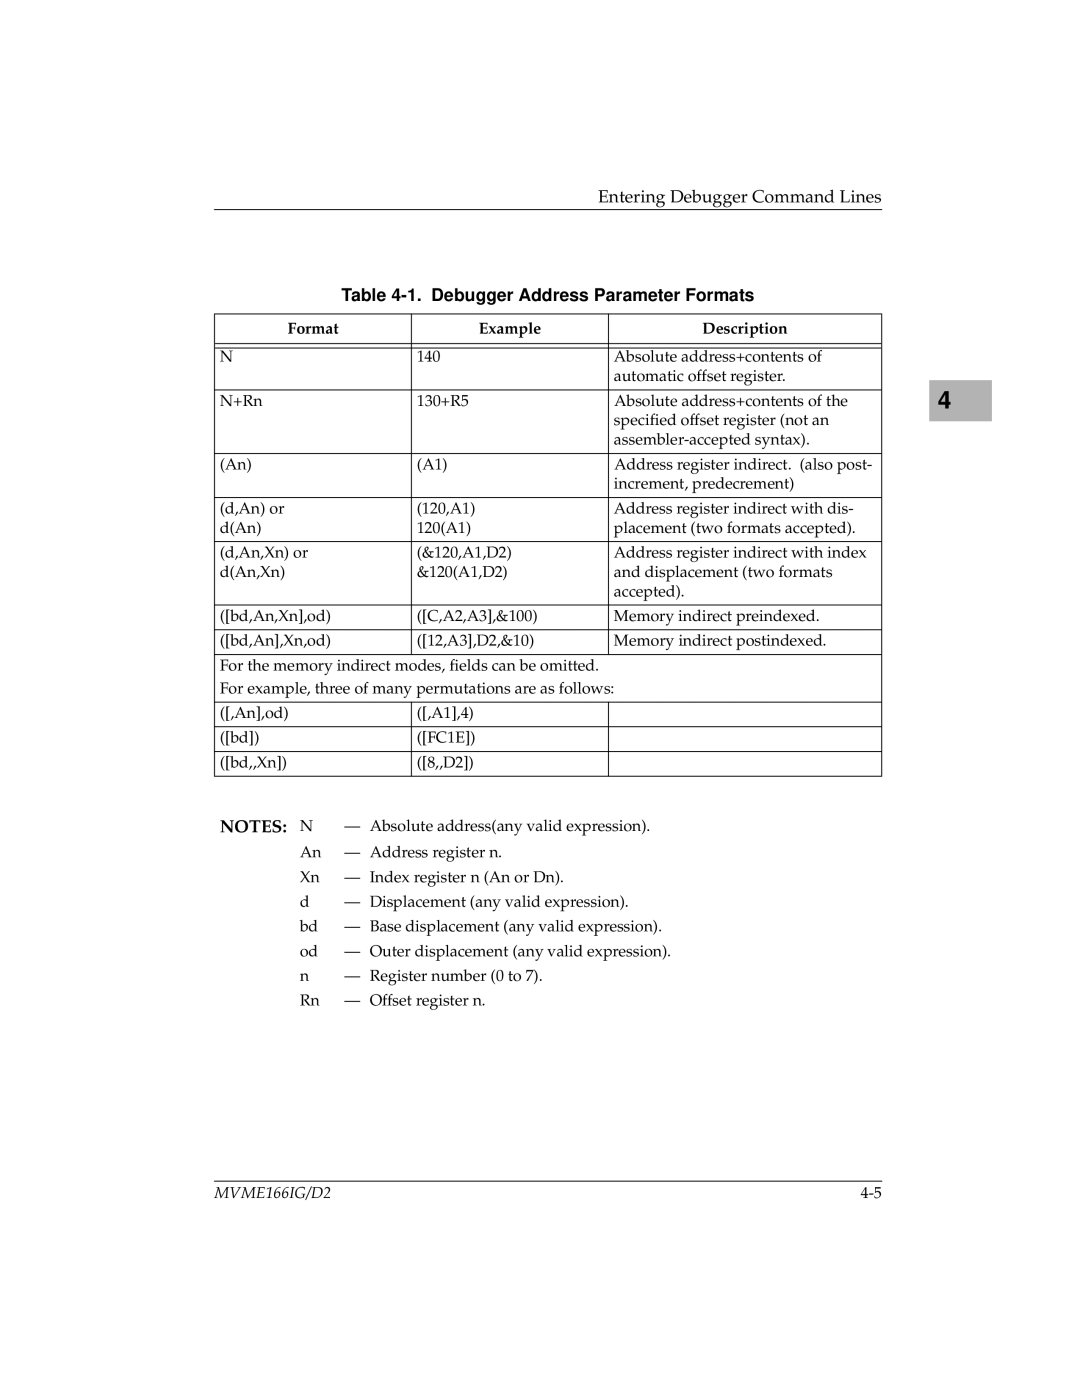 Motorola MVME166IG/D2 manual Debugger Address Parameter Formats, Format Example Description 